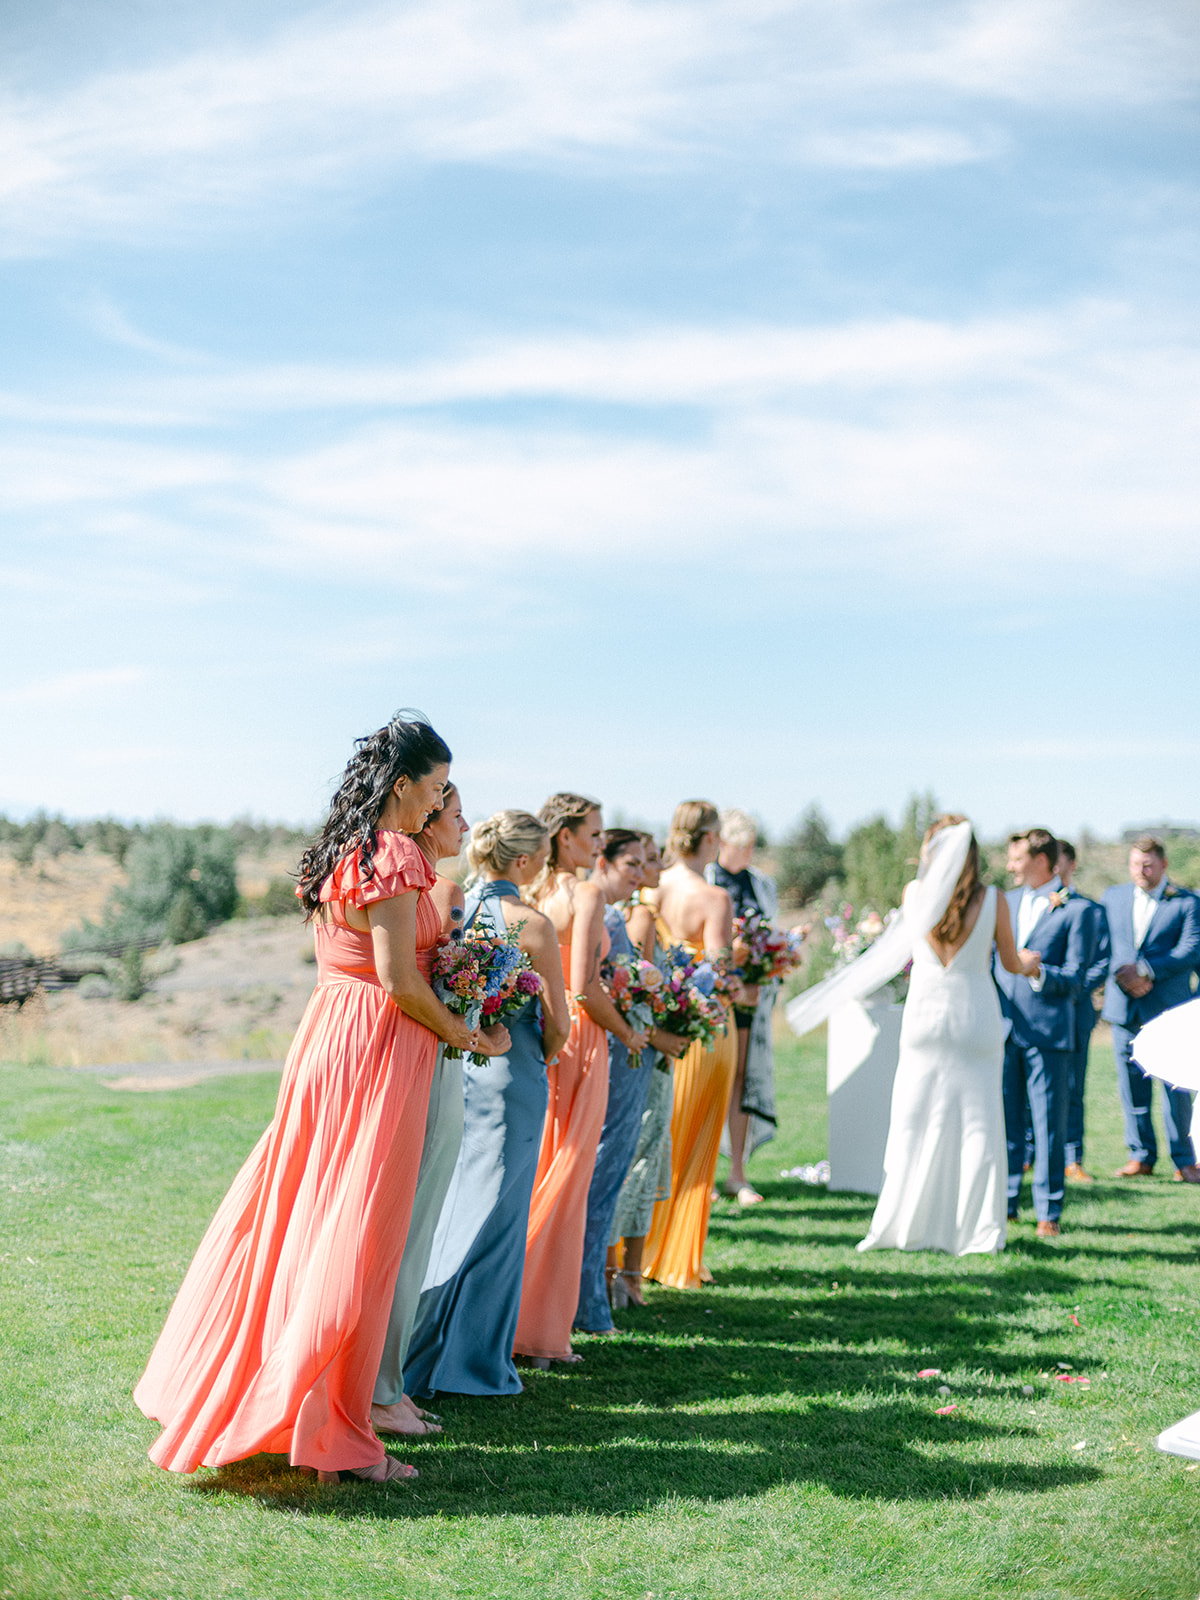 colorful bridesmaid dresses